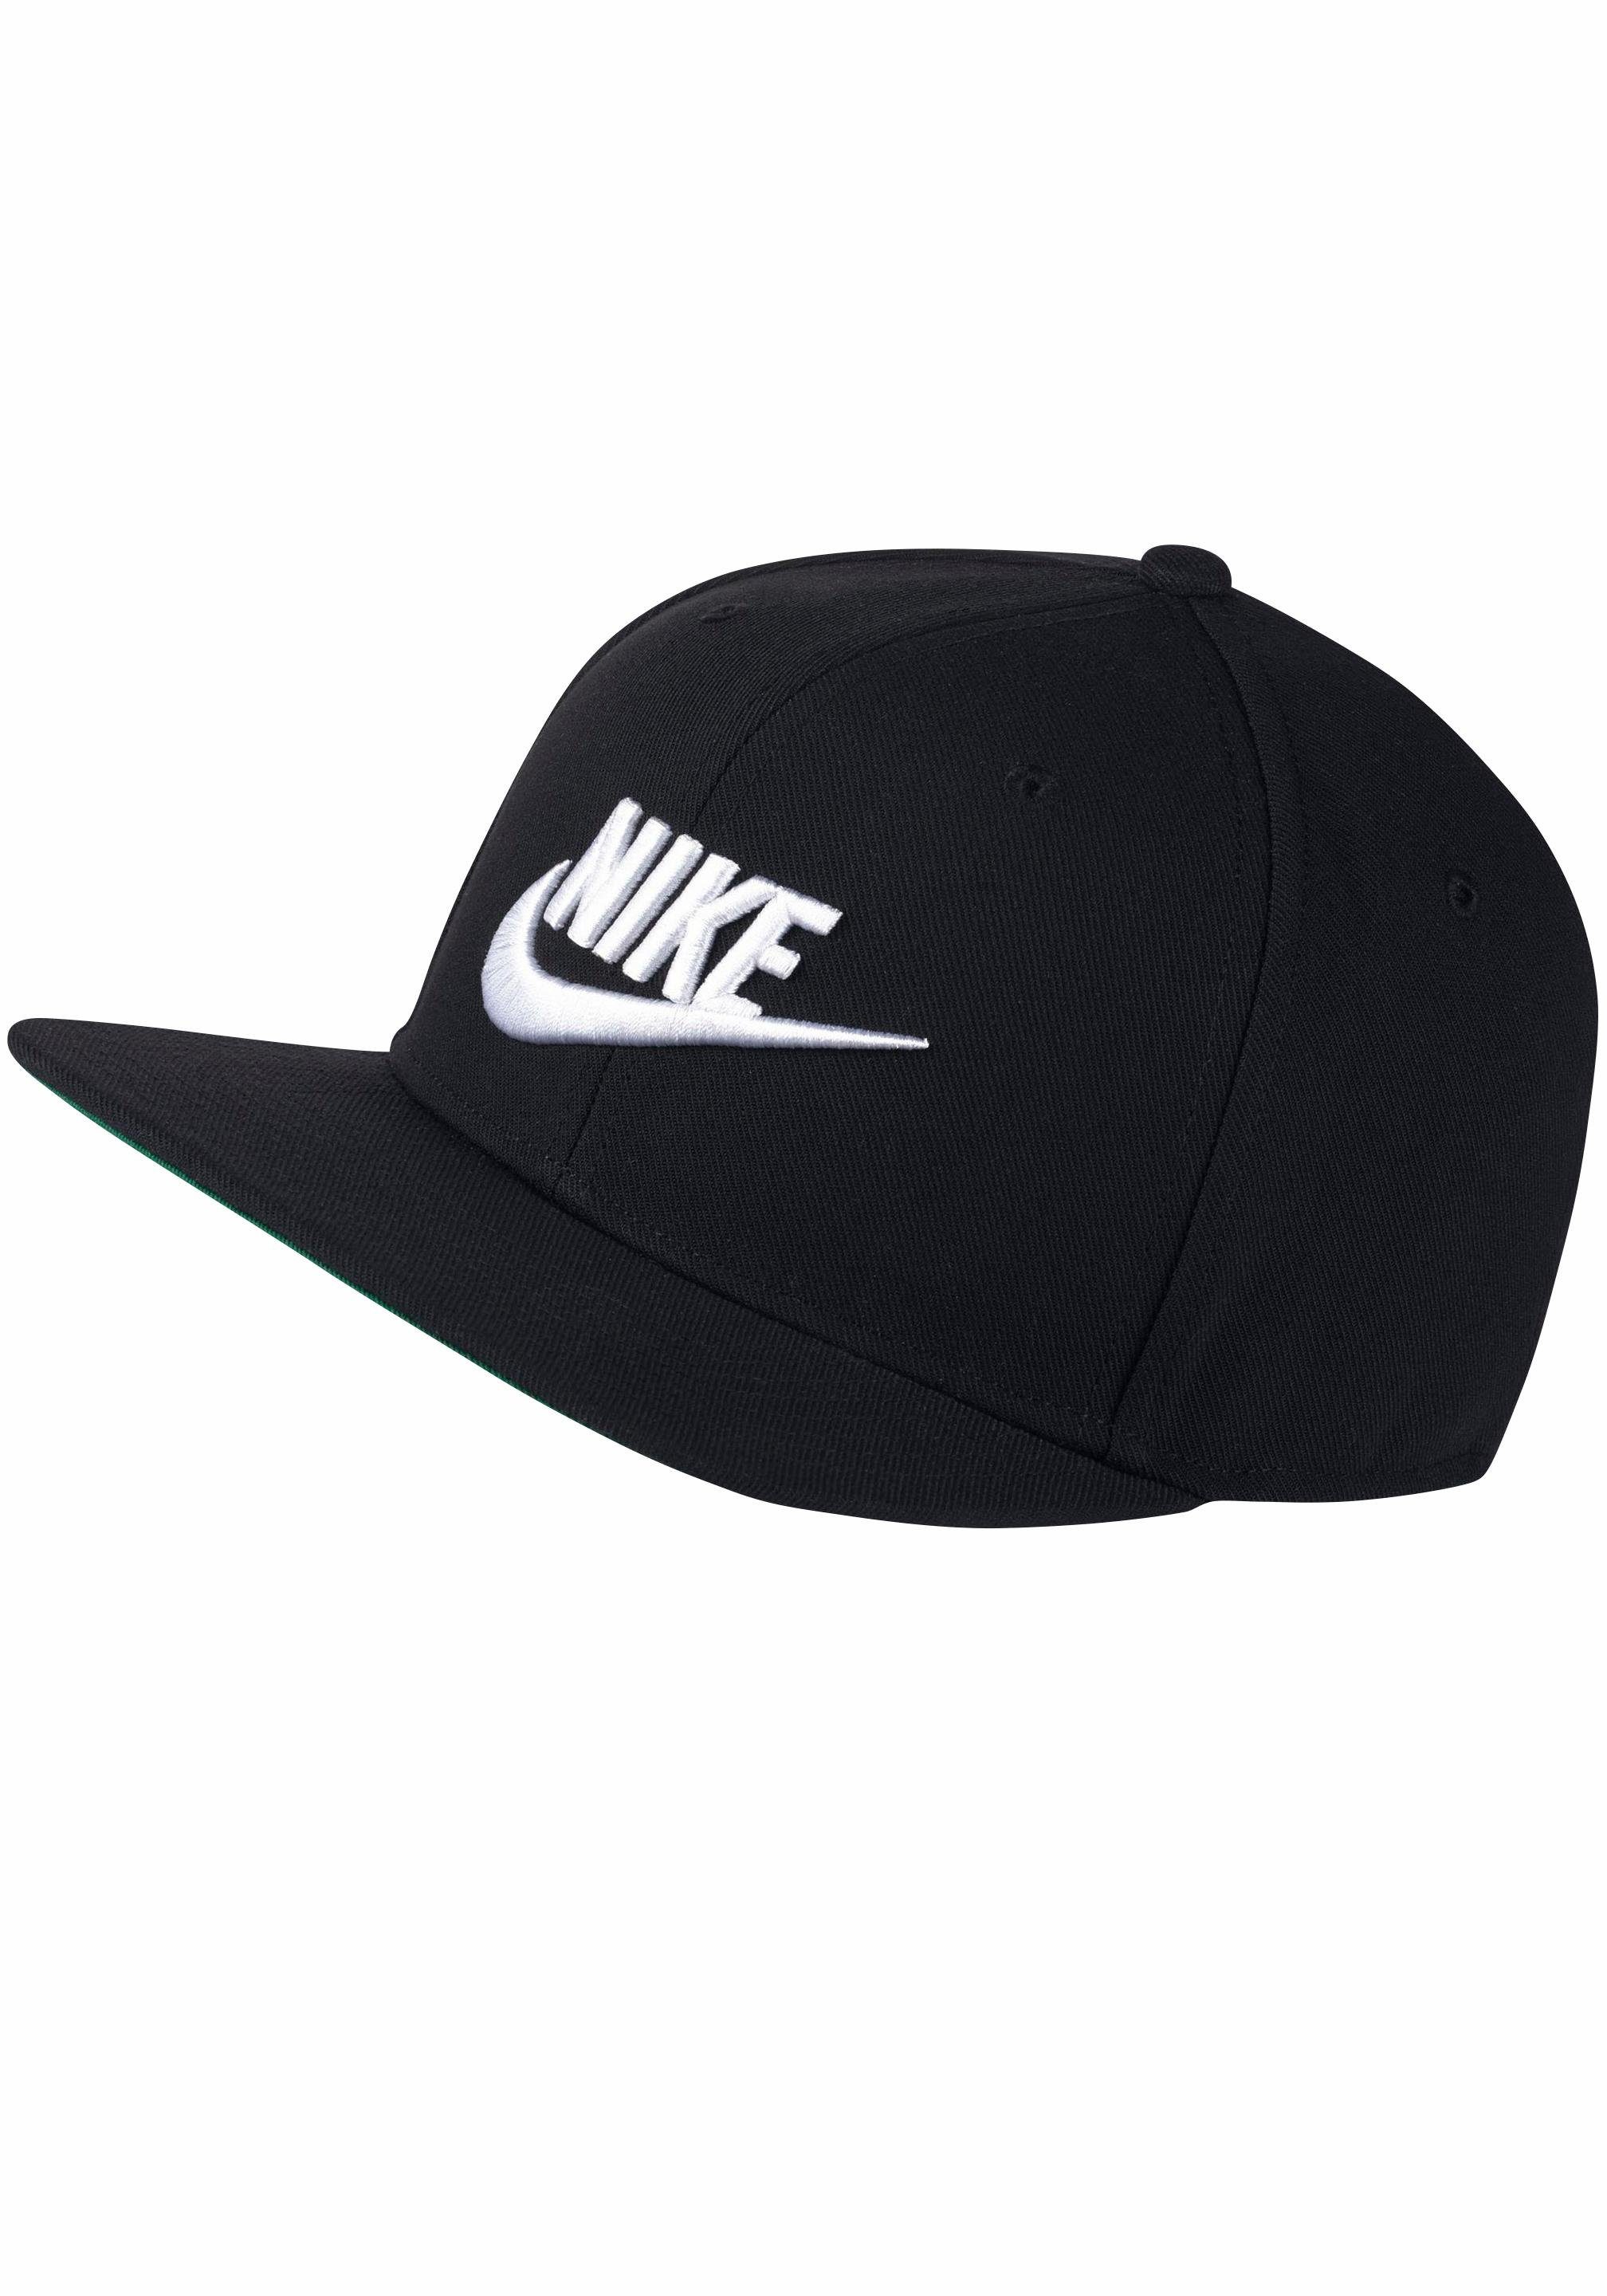 Nike Caps online kaufen | OTTO